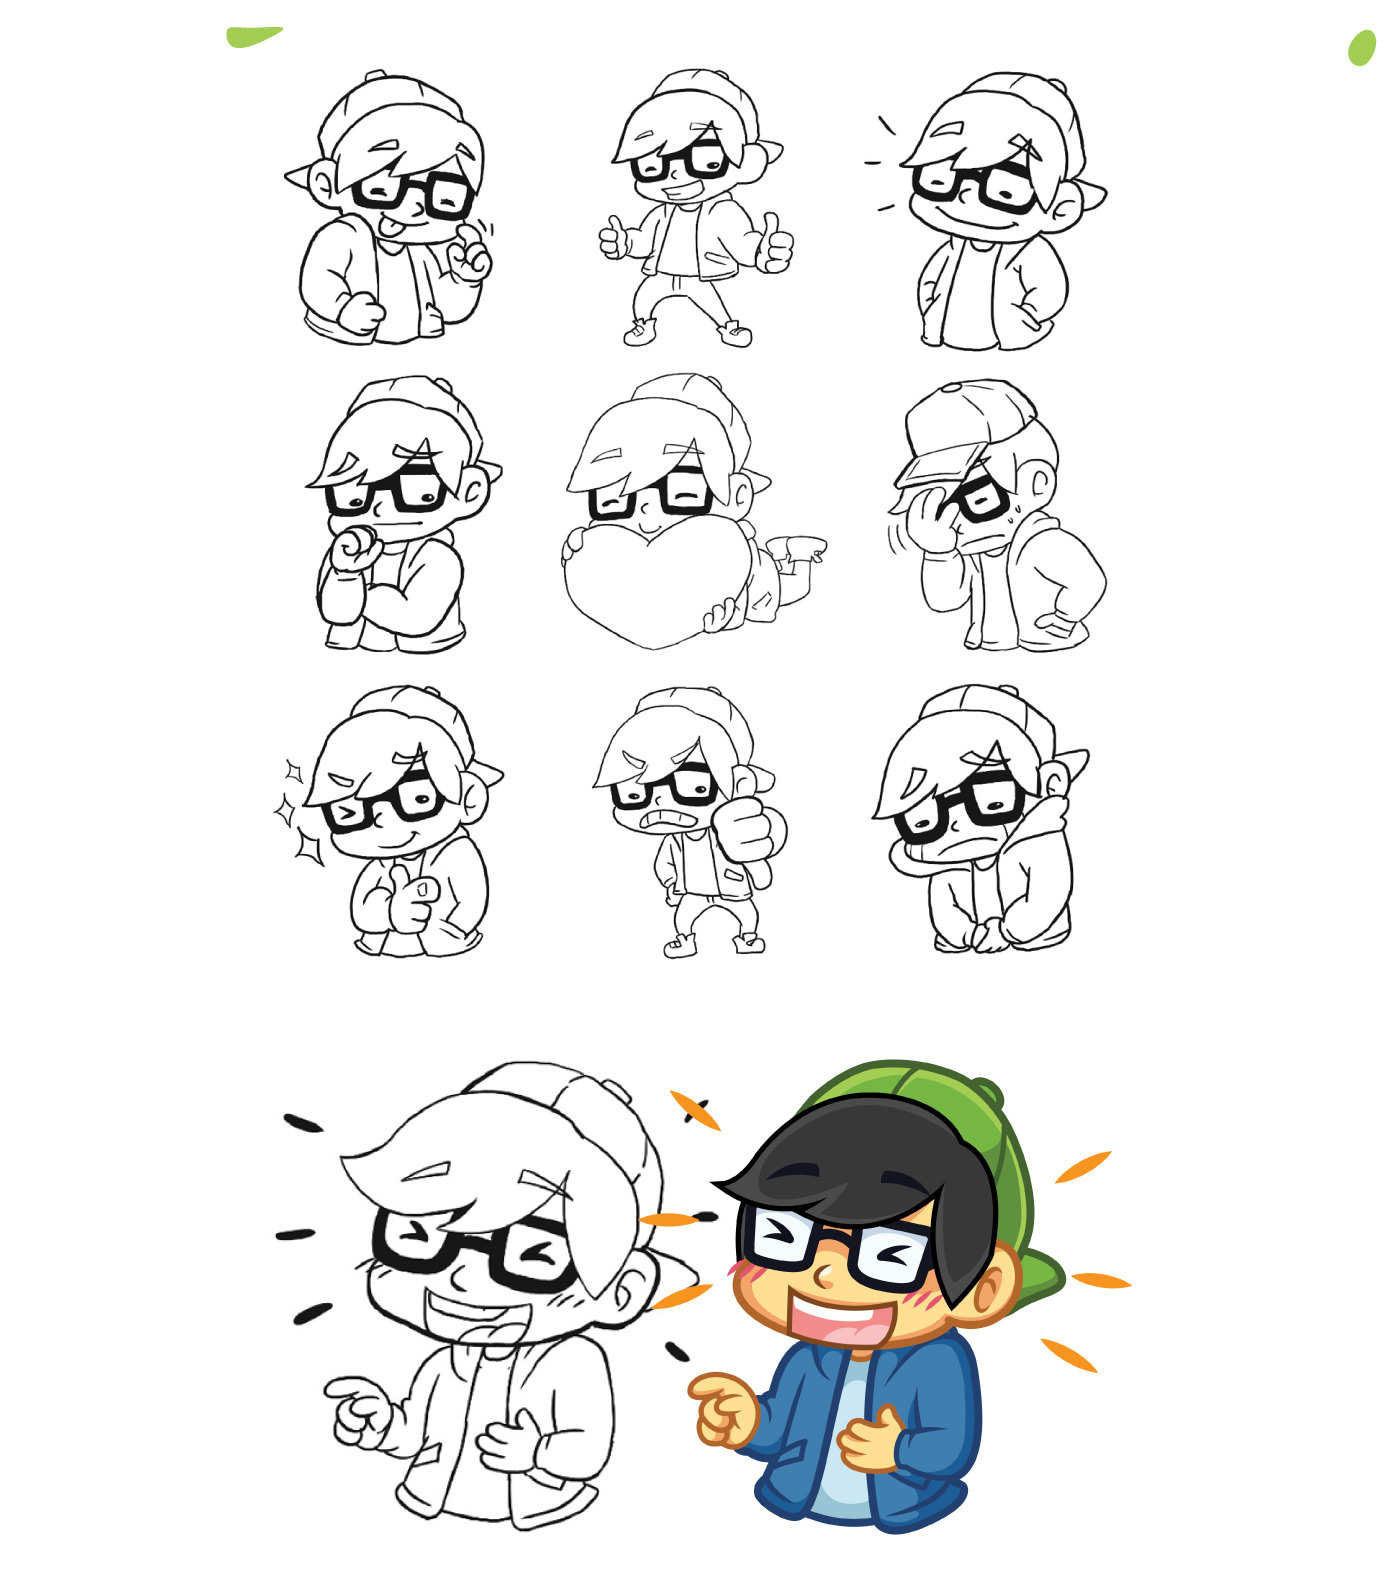 stickers askfm line KakaoTalk messenger Mascot Geek Guy glasses expressions cartoon